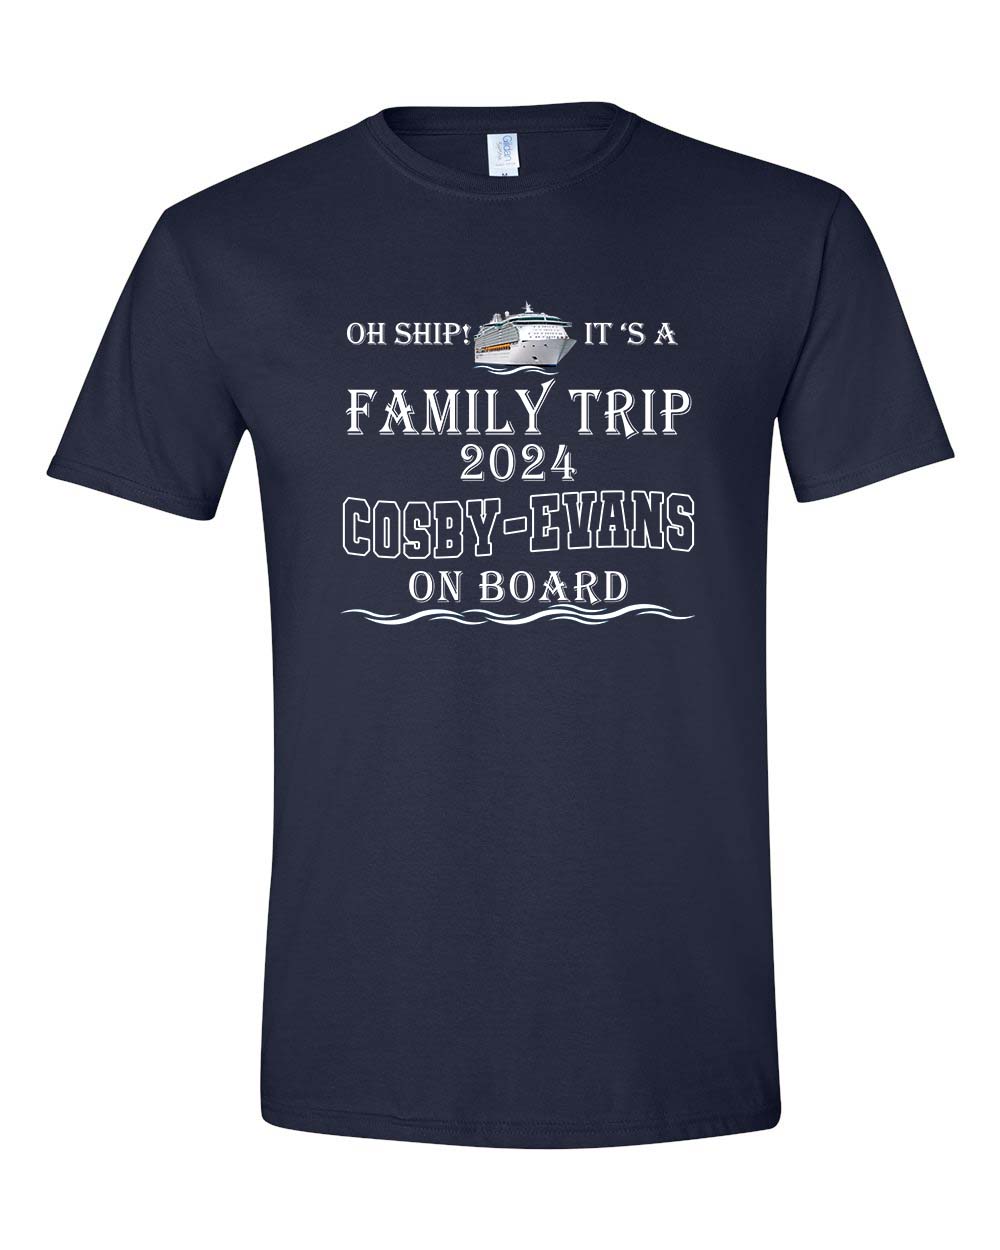 Cosby-Evans Reunion Cruise 2024 Merch Package - T-Shirt & Lanyard